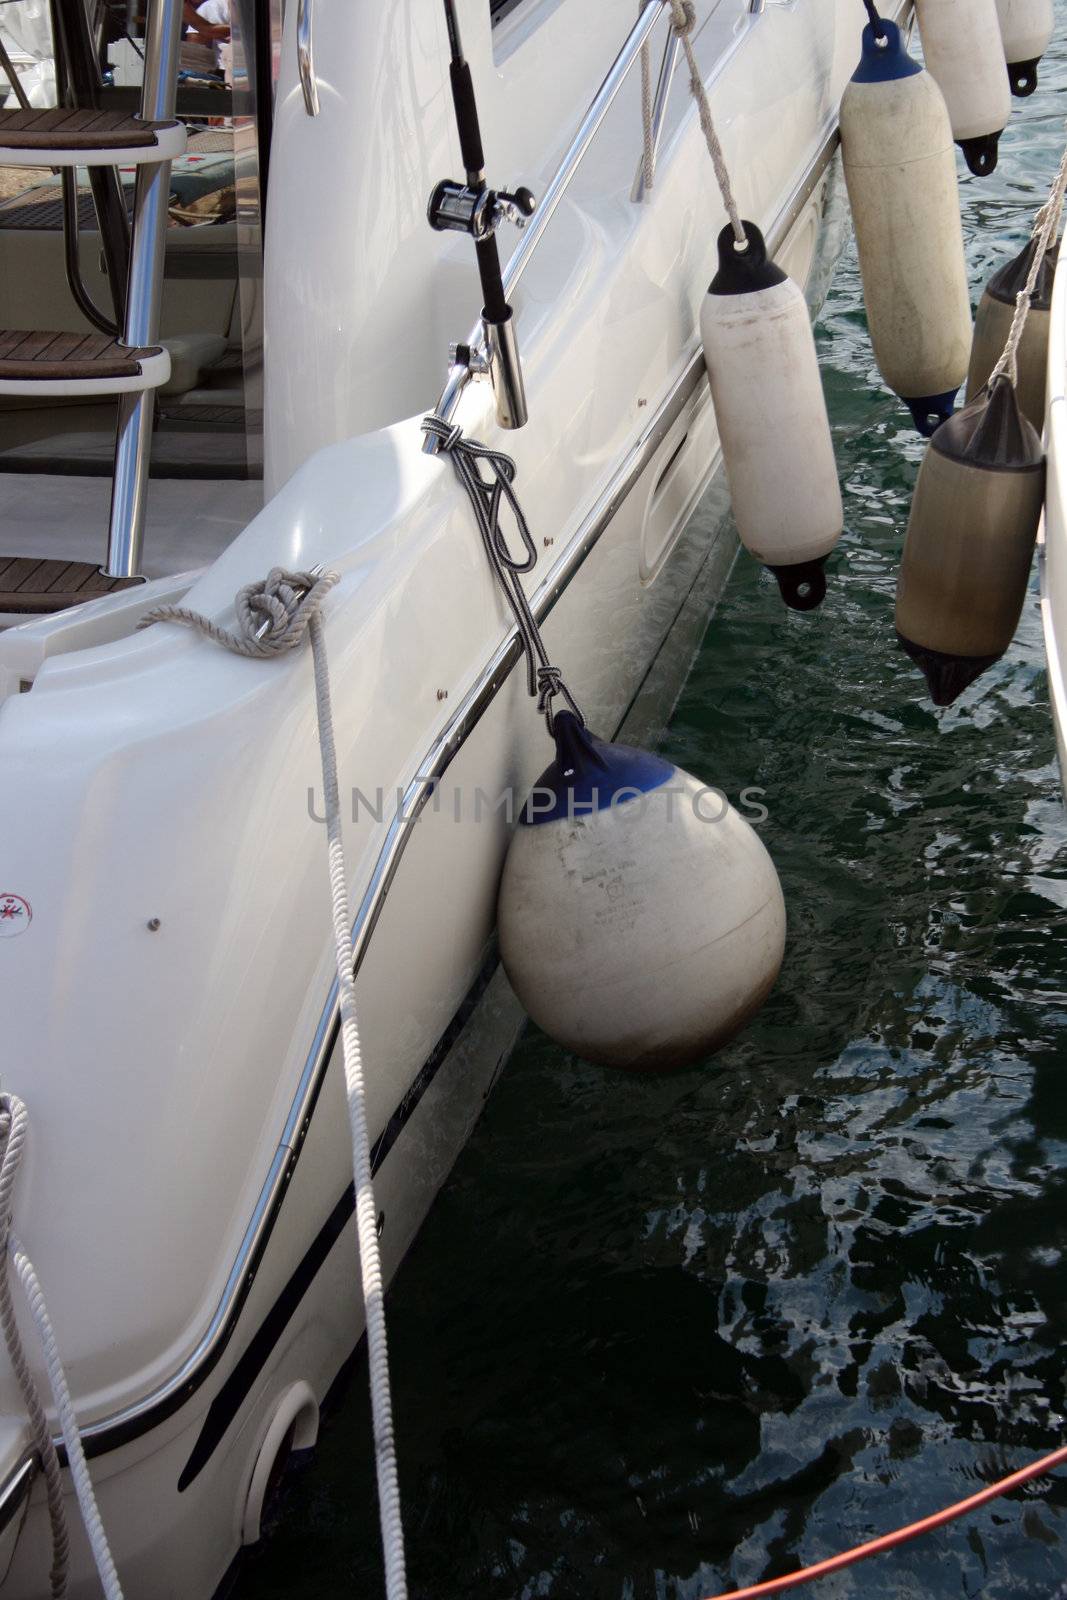 buoys protecting the boats